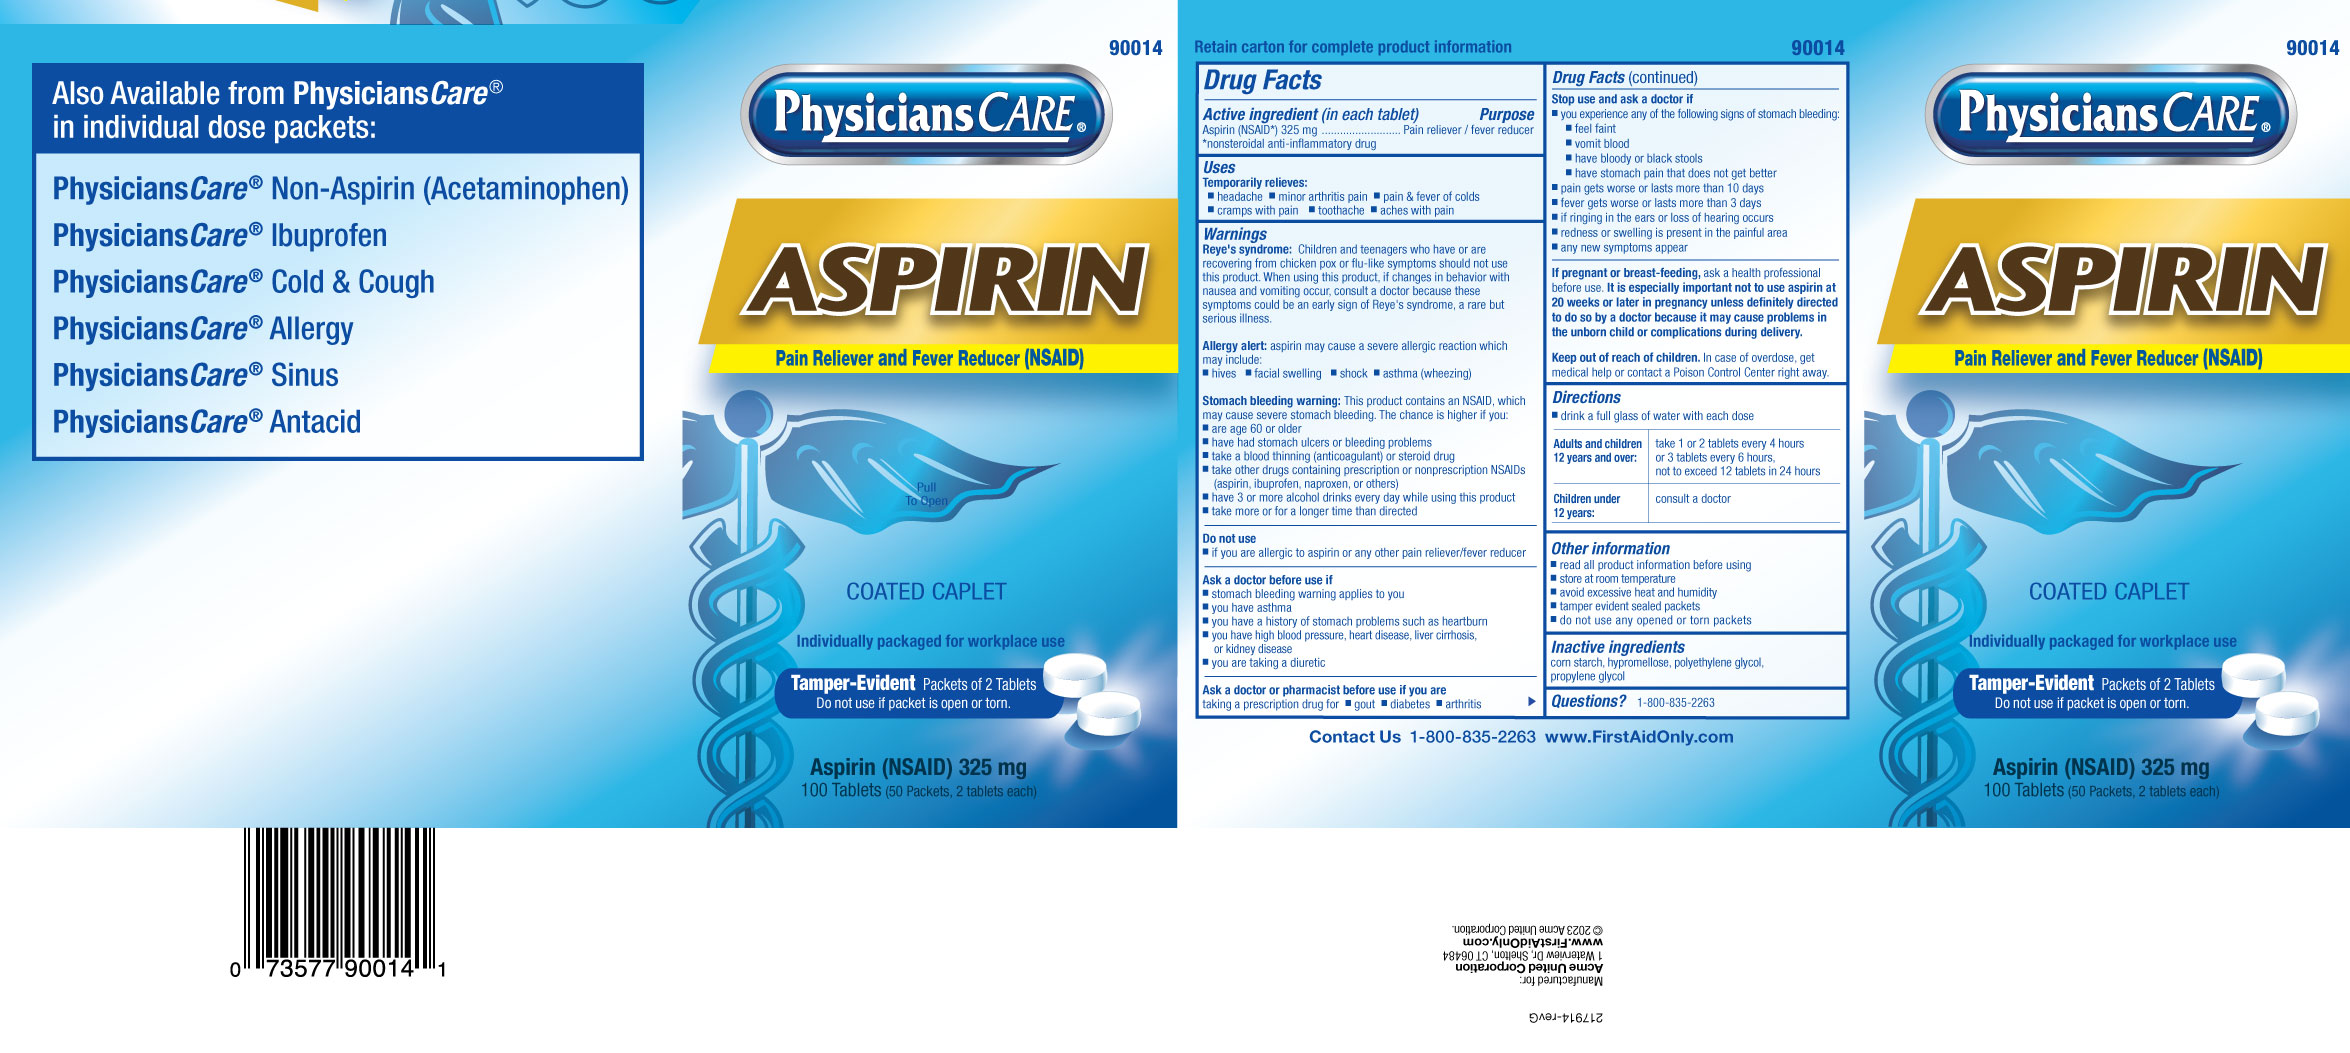 116R 90014 PC-Aspirin LNK Label